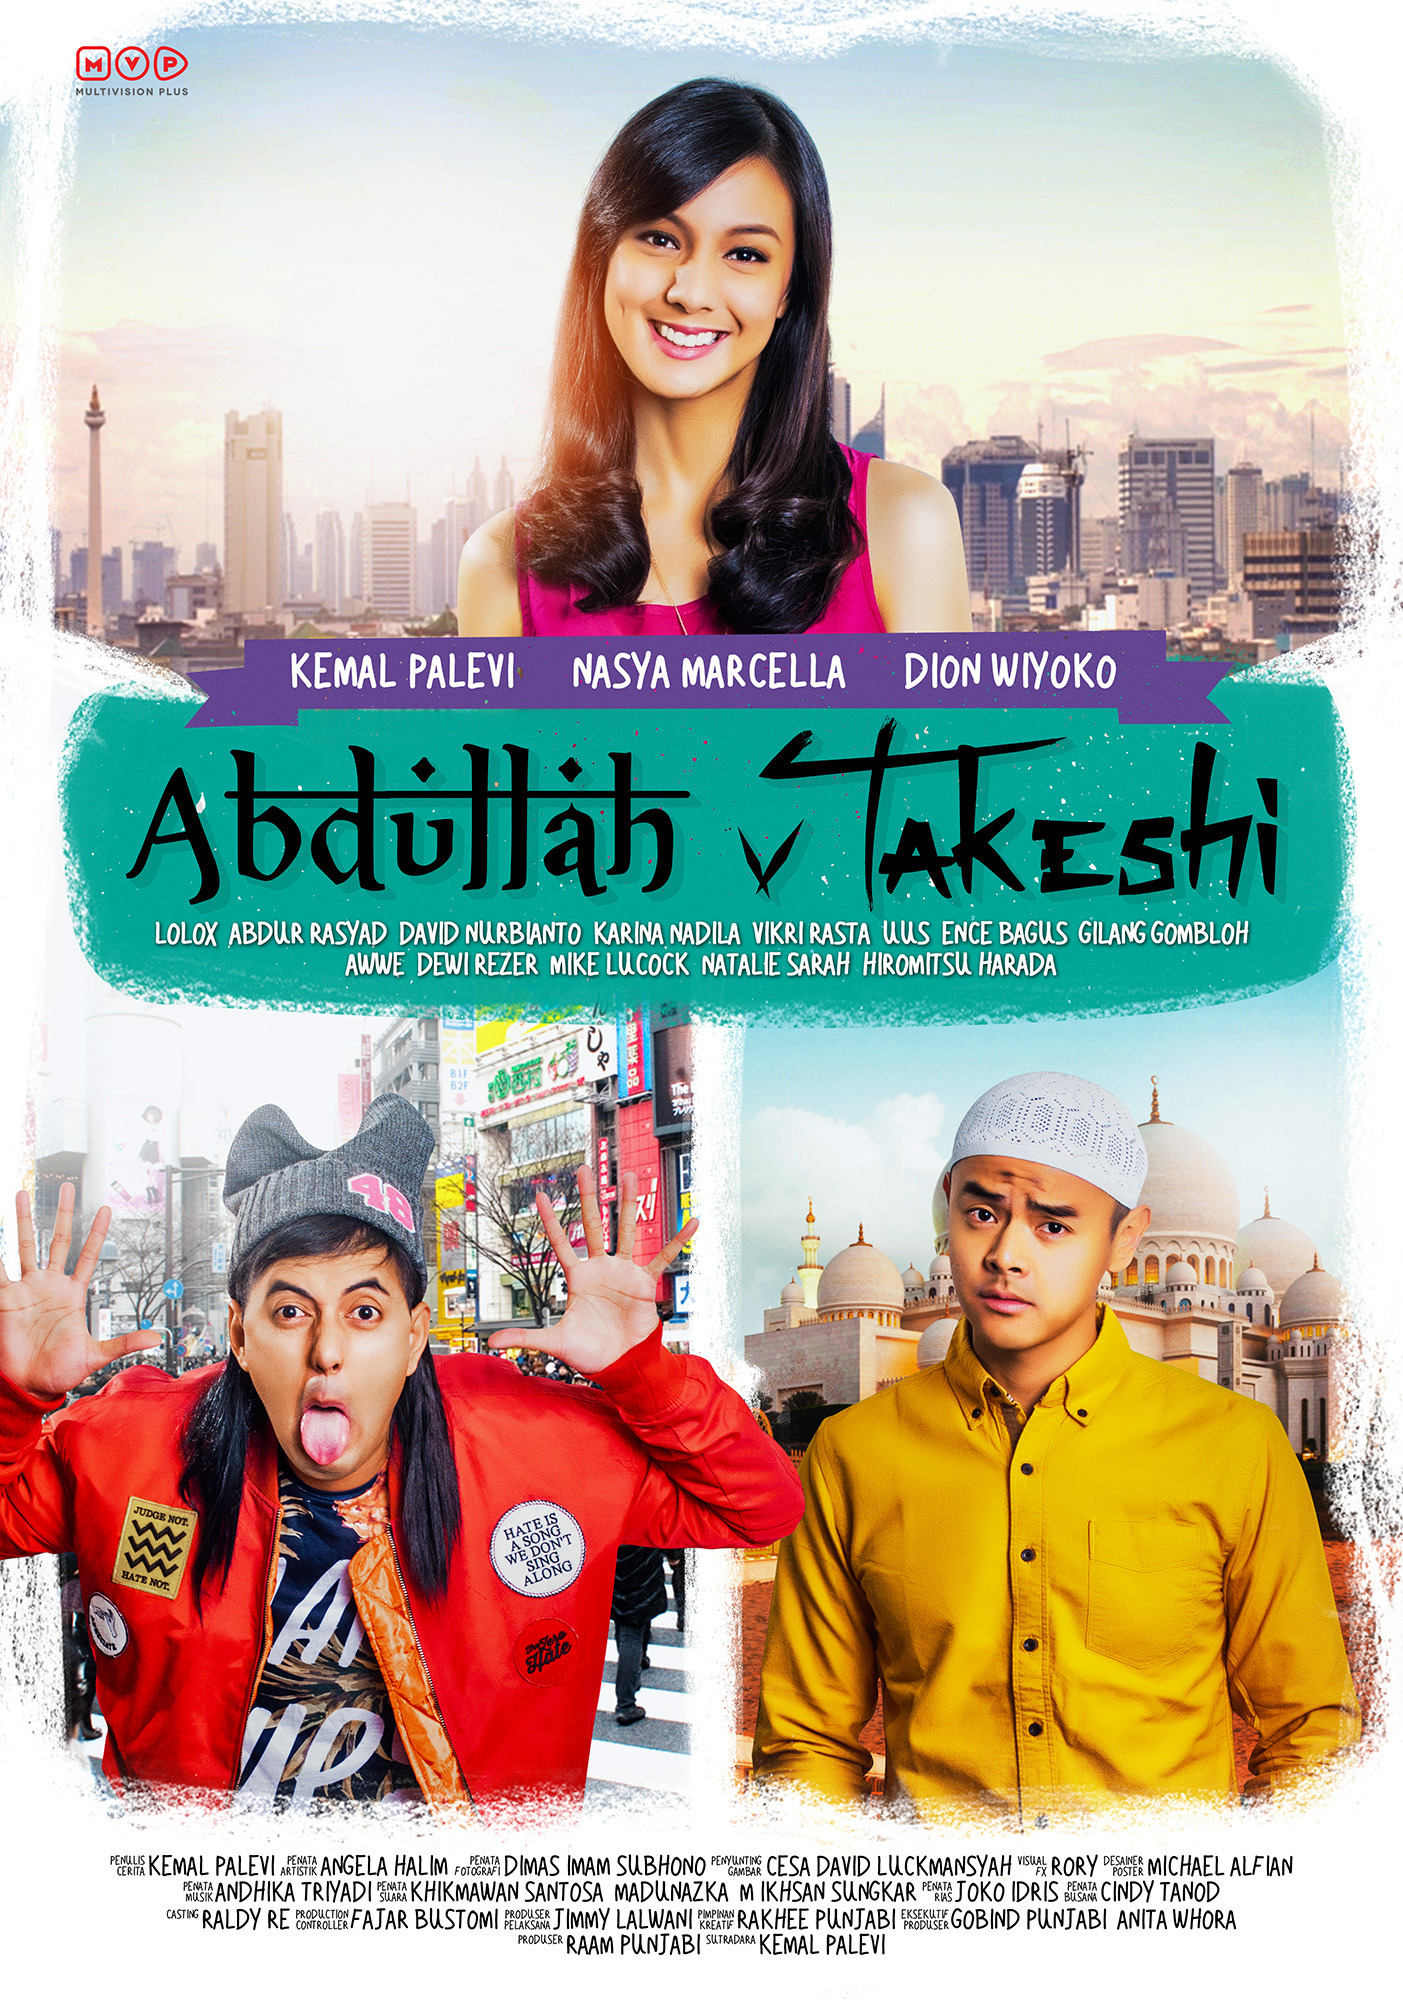 Mega Sized Movie Poster Image for Abdullah & Takeshi (#1 of 2)